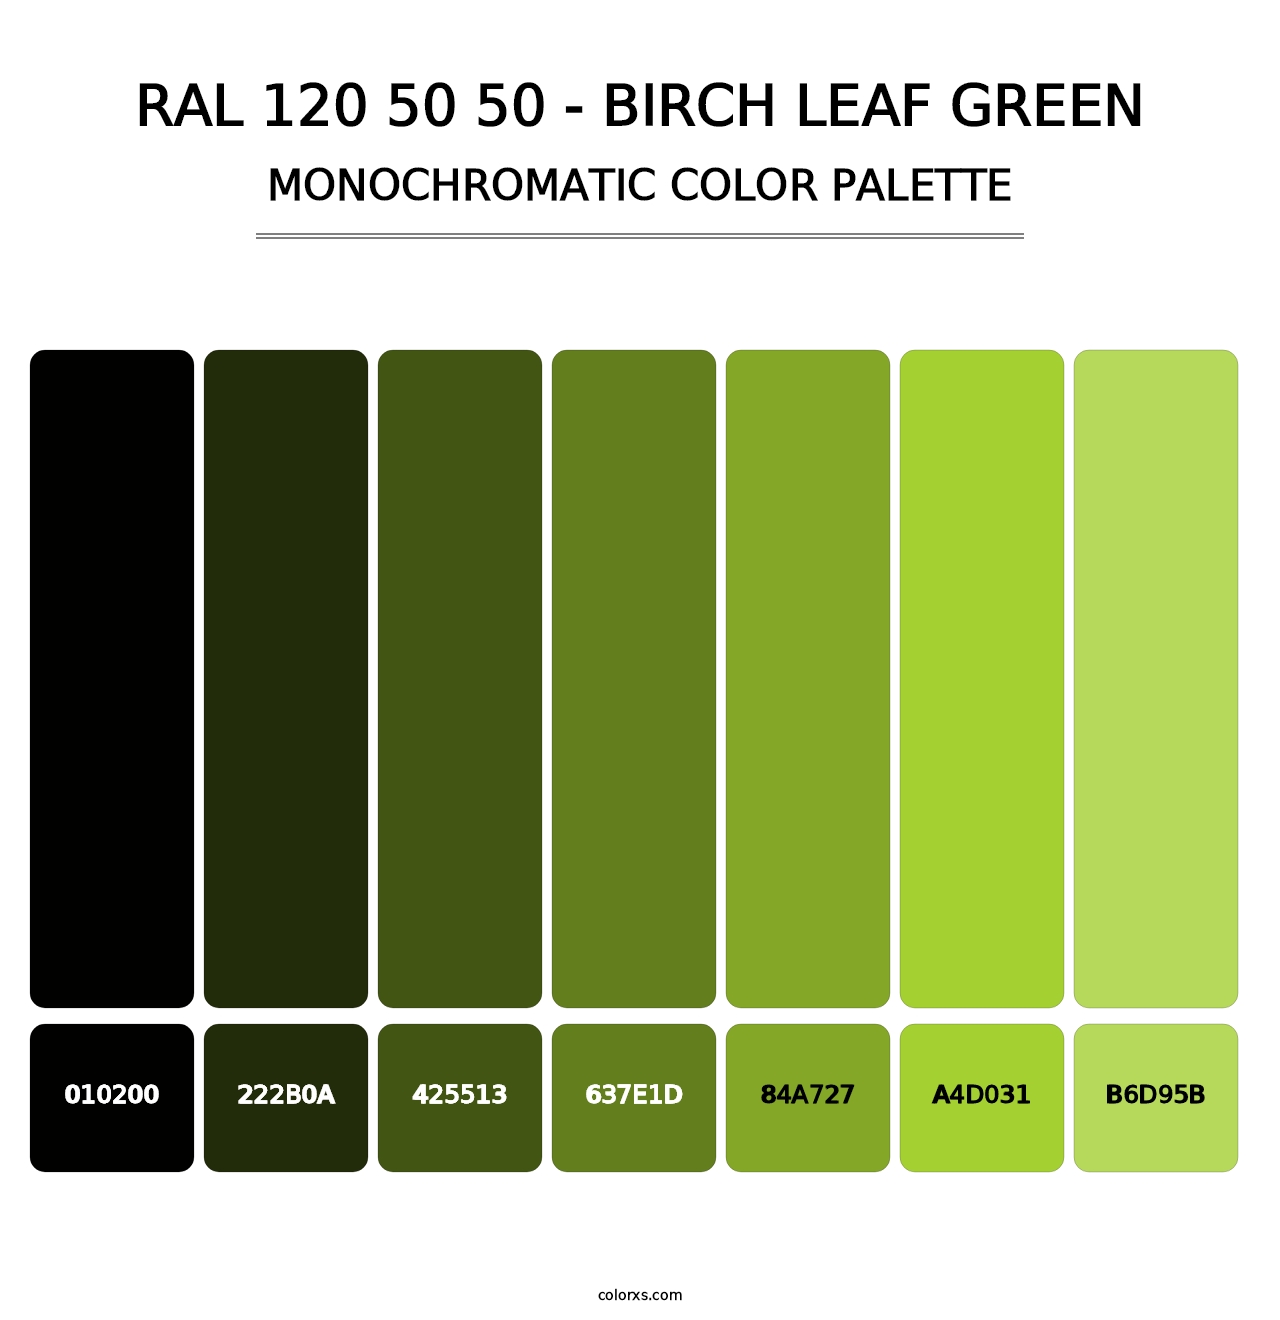 RAL 120 50 50 - Birch Leaf Green - Monochromatic Color Palette